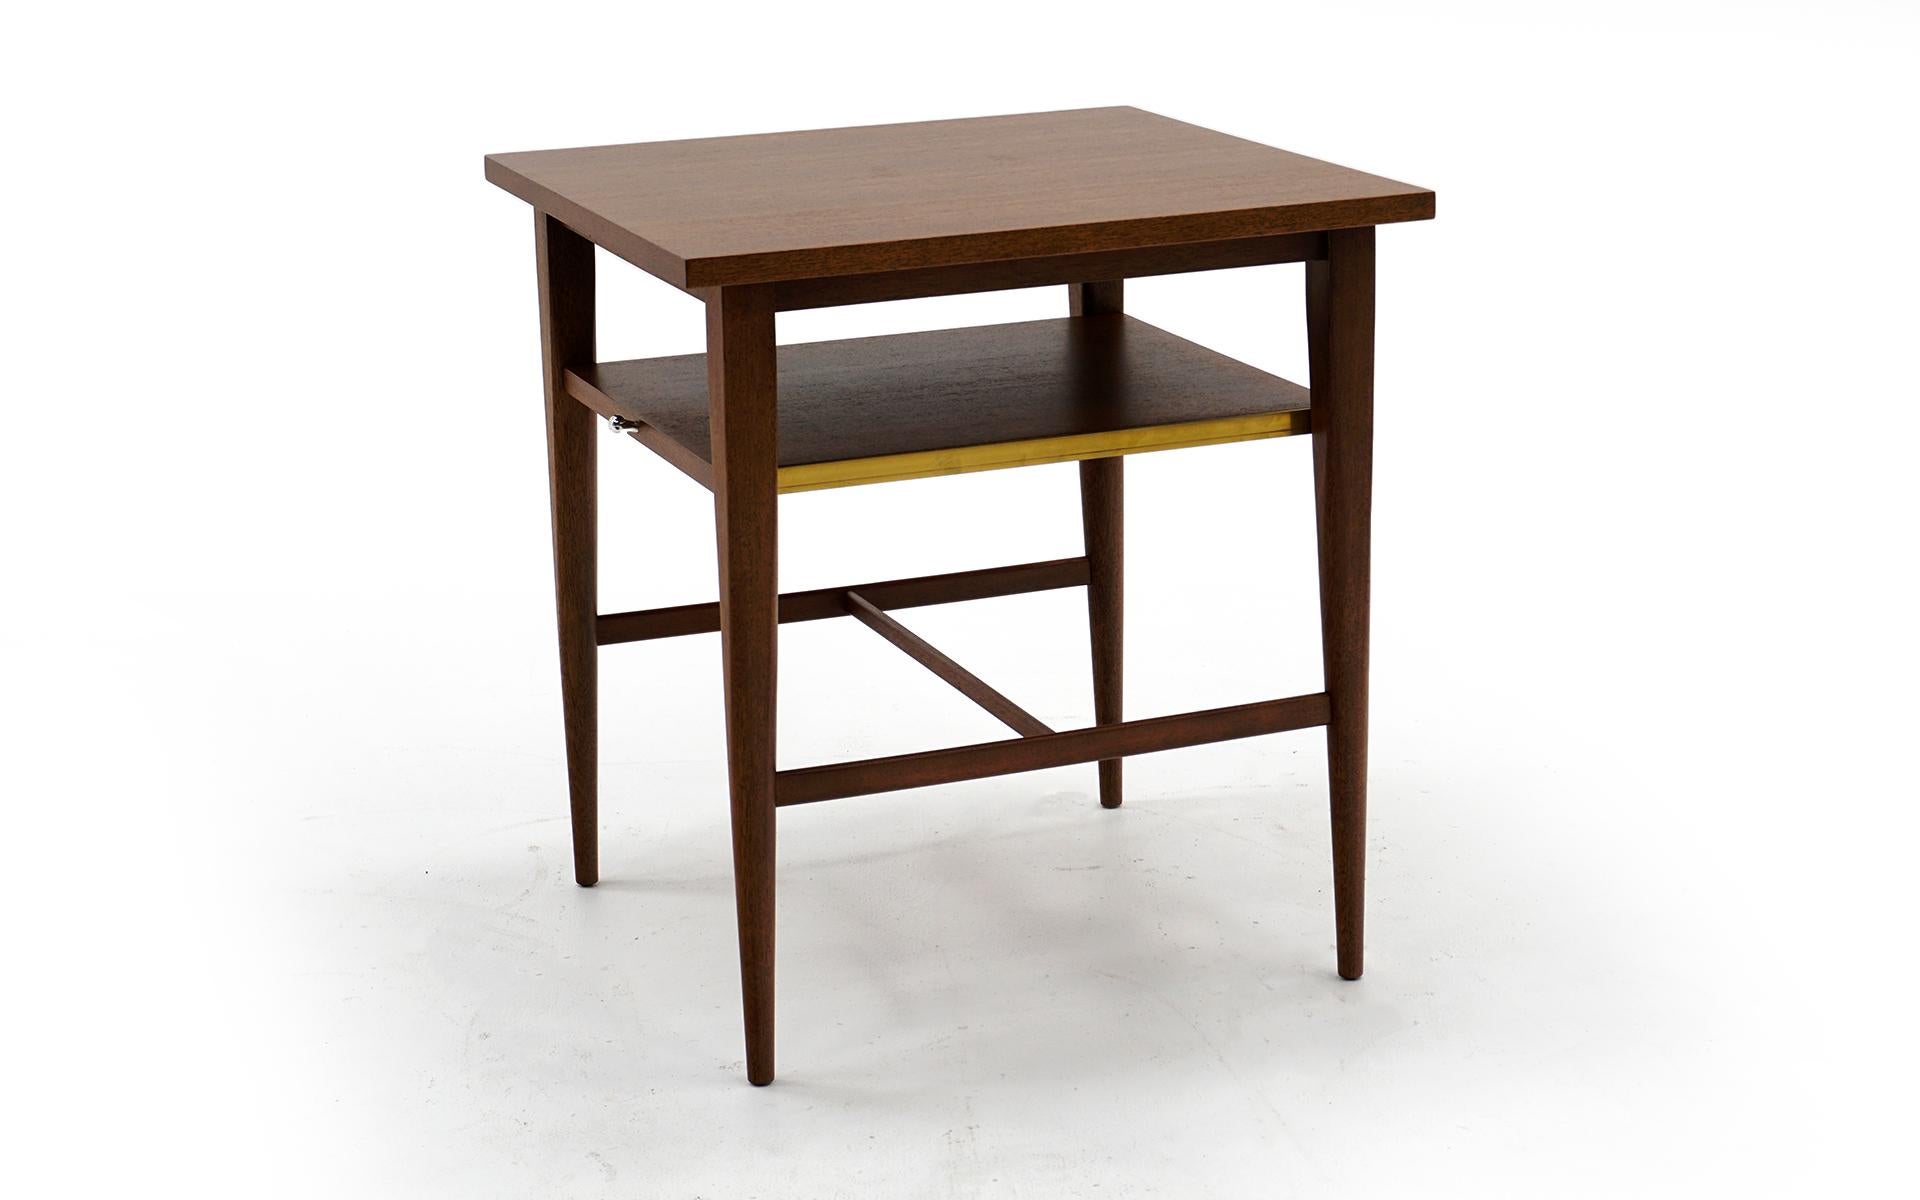 Mid-20th Century Paul McCobb Model 1047 Side / End Table / Nightstand for Calvin, Slide Out Shelf